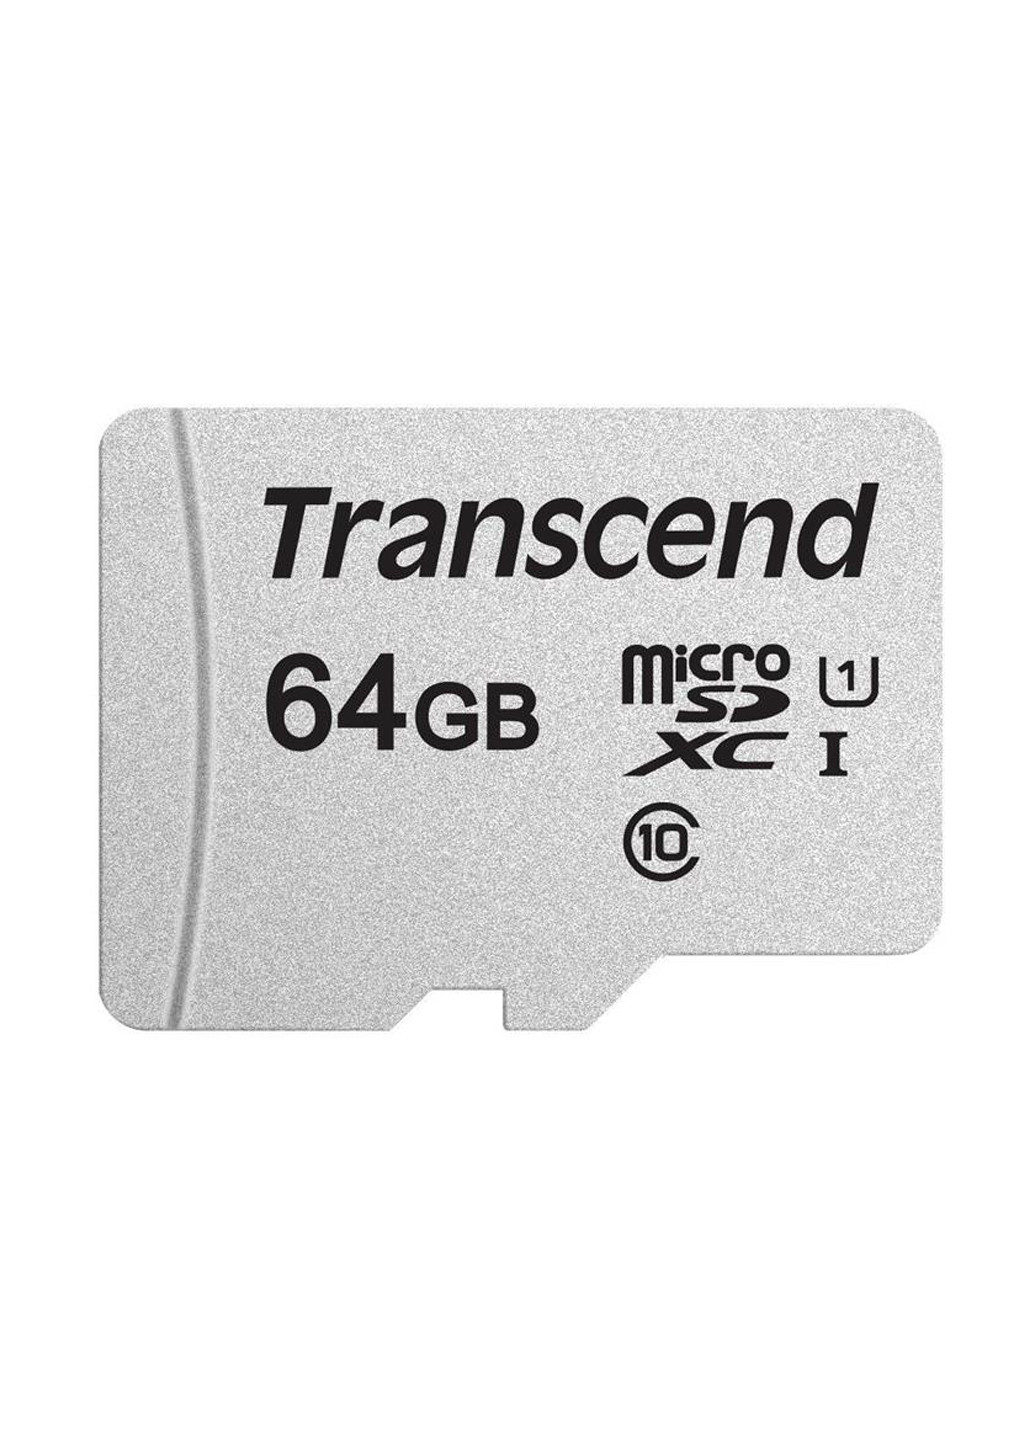 Карта памяти microSDXC 64GB C10 UHS-I (R95/W45MB/s) (TS64GUSD300S) Transcend Карта памяти Transcend microSDXC 64GB C10 UHS-I (R95/W45MB/s) (TS64GUSD300S) чёрные